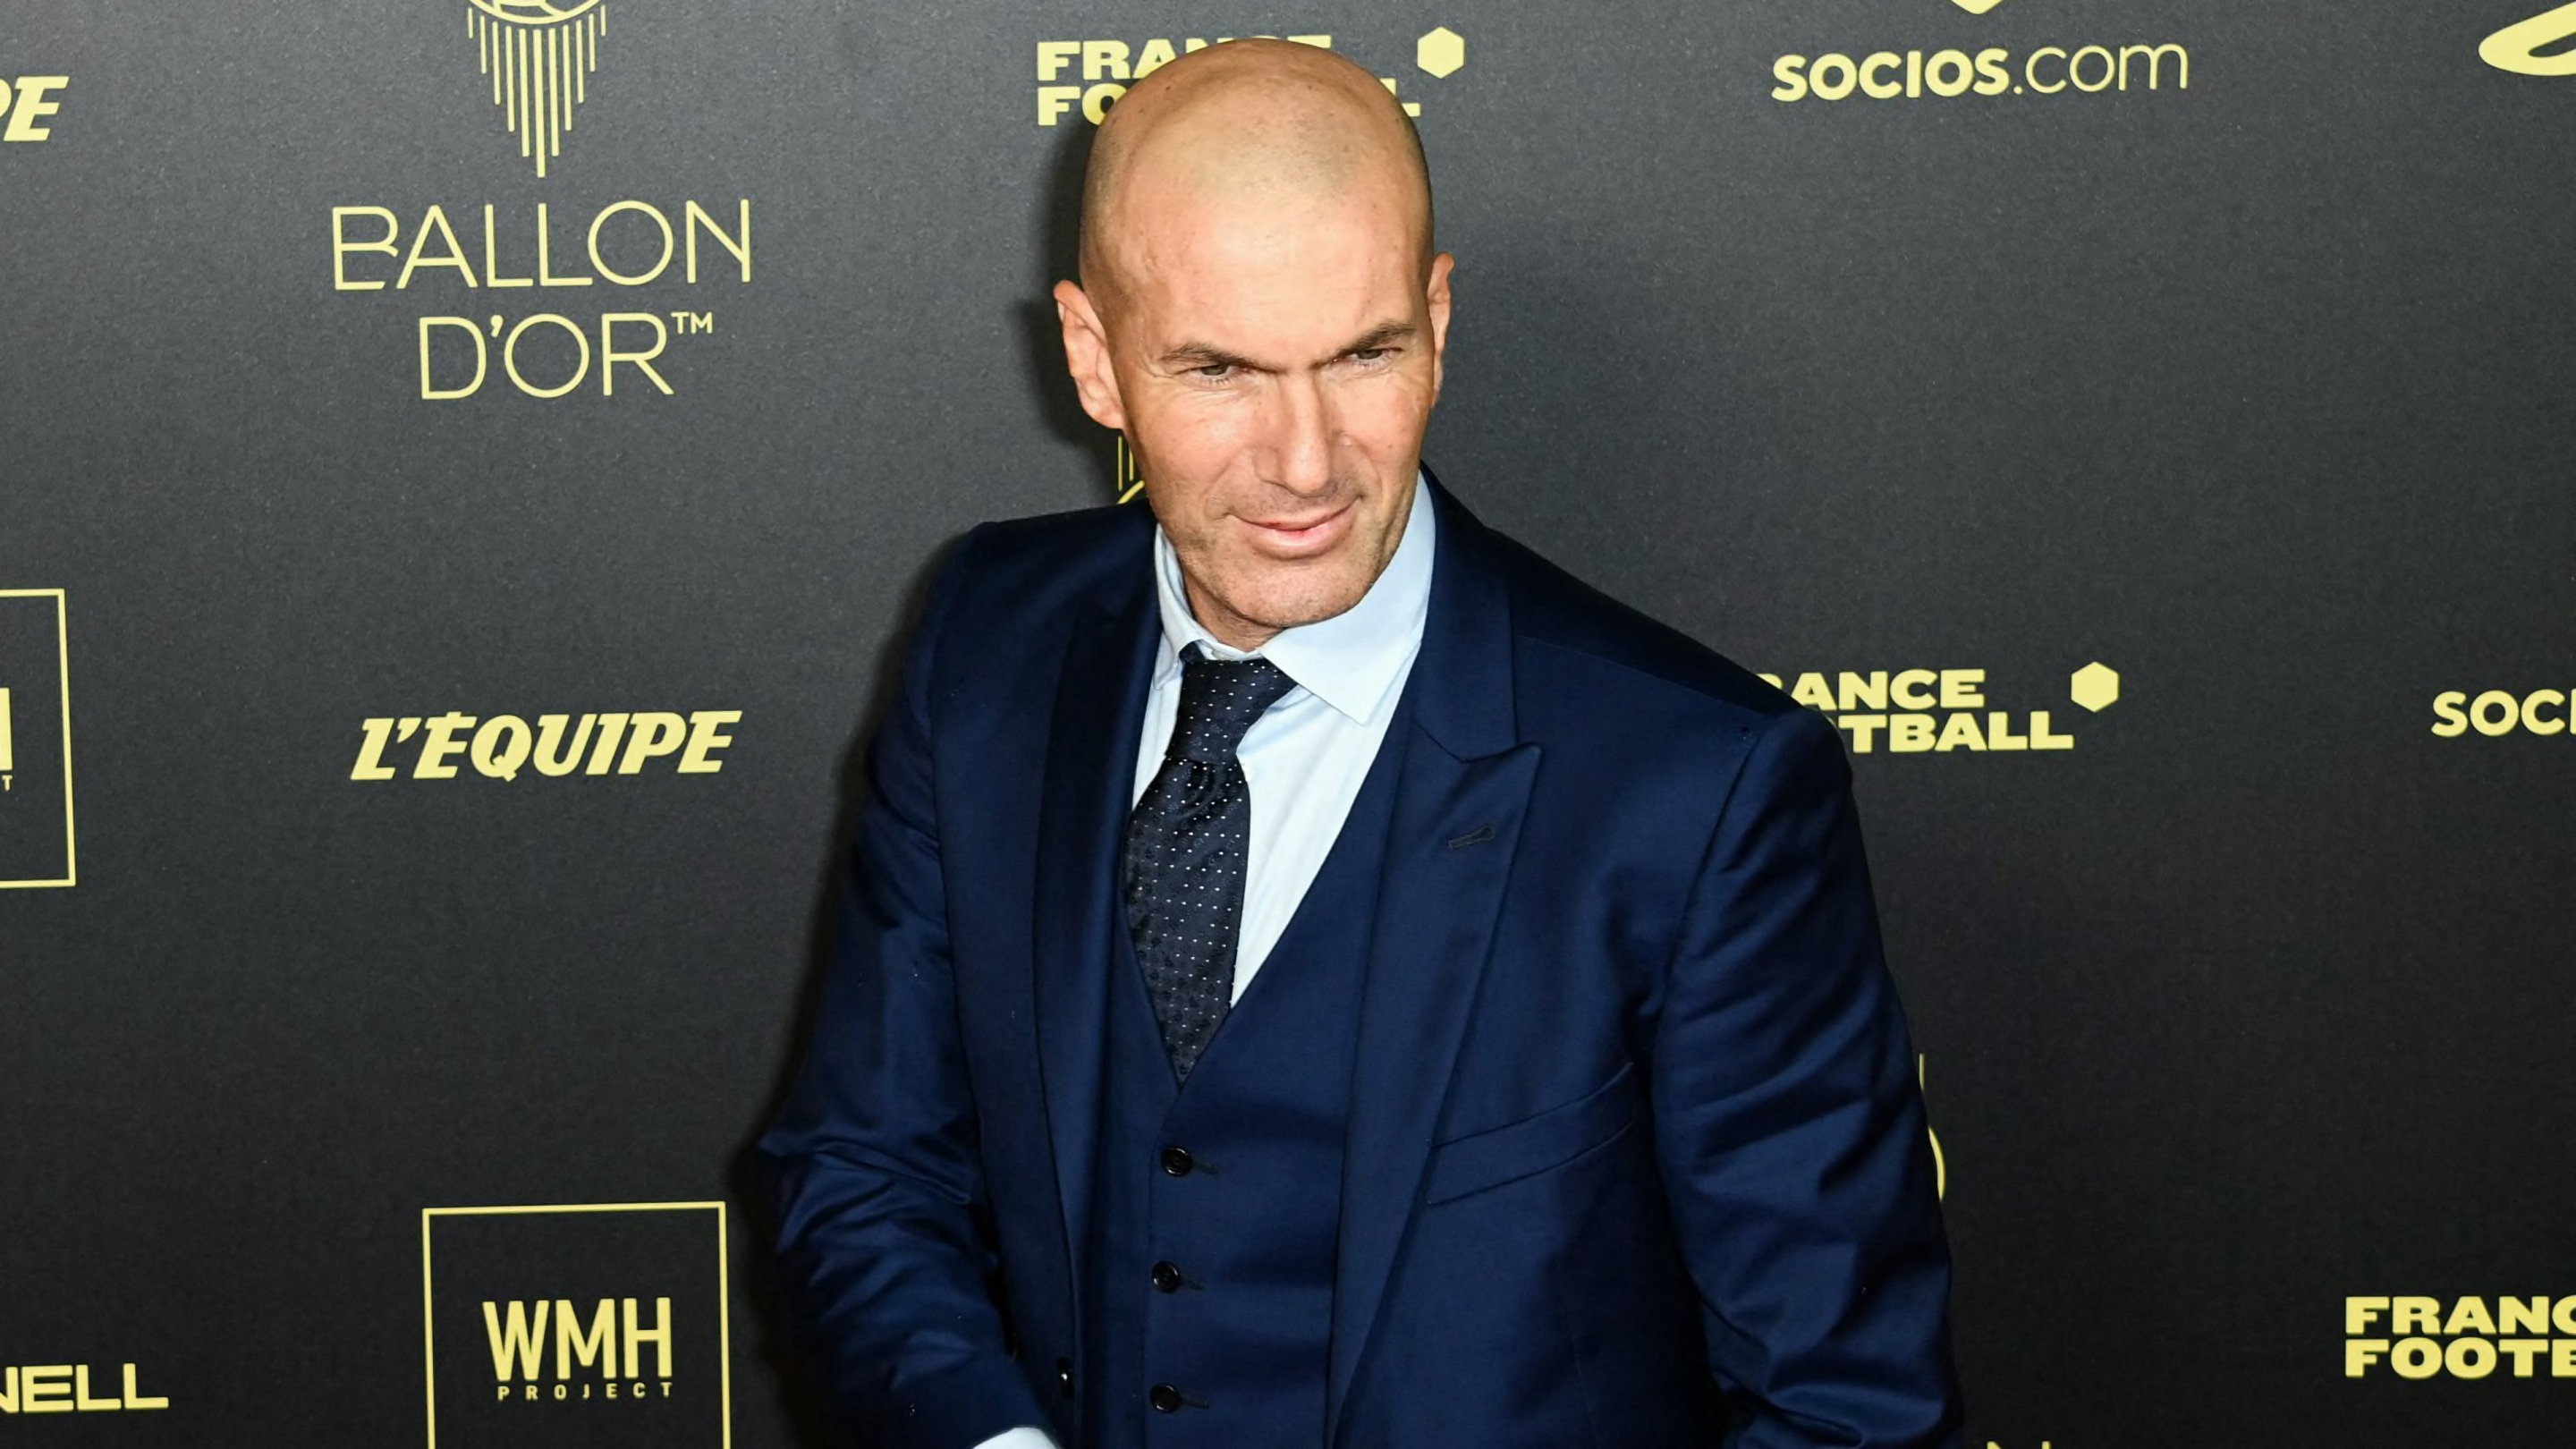 What Zinedine Zidane has said about managing Man Utd